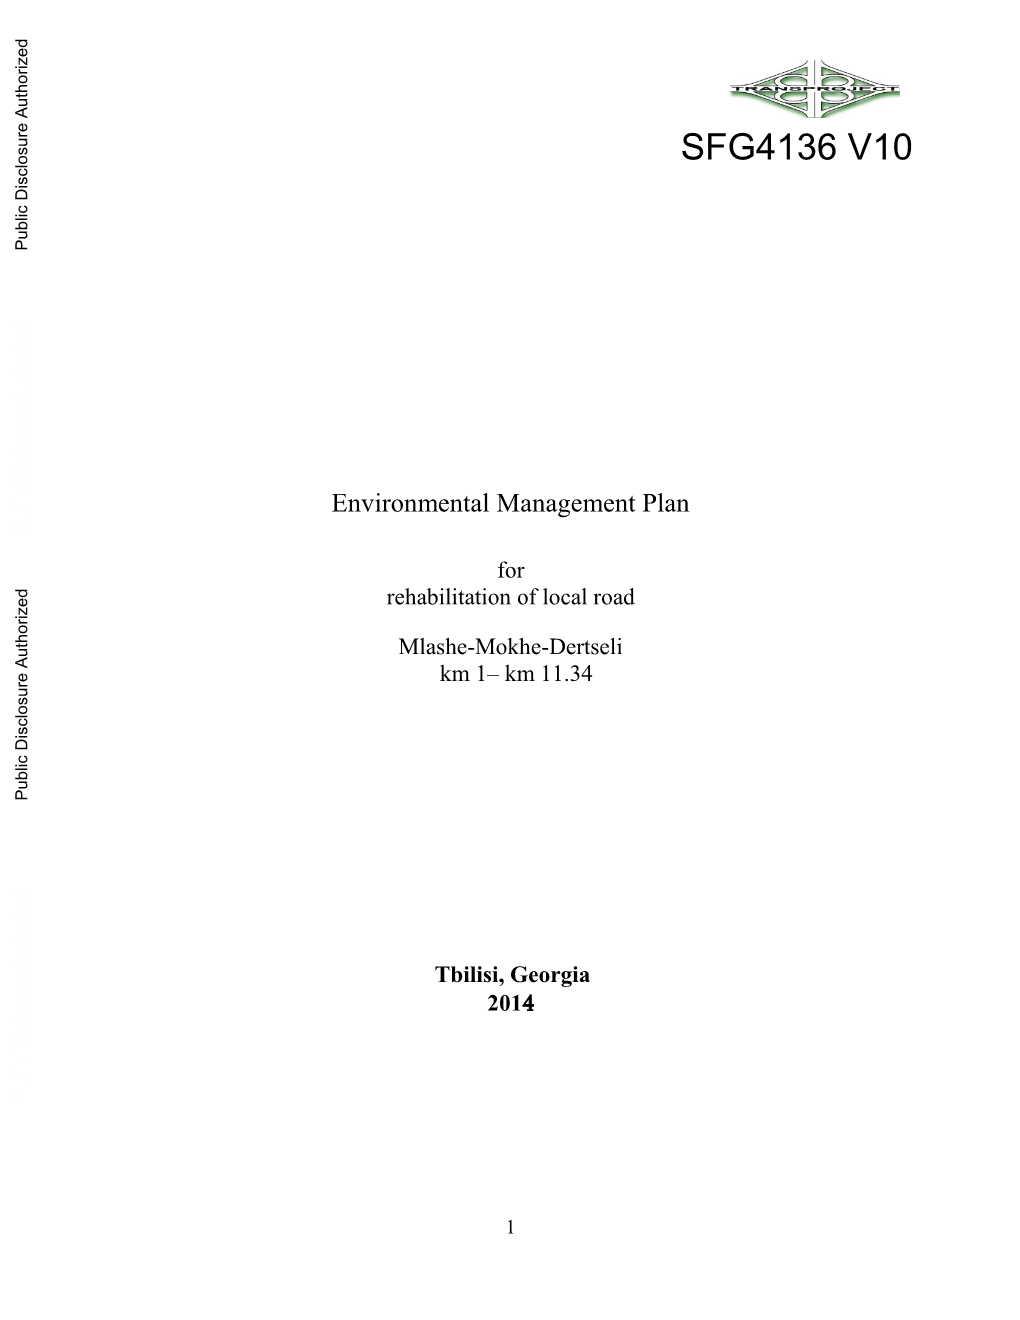 Environmental Management Plan Public Disclosure Authorized for Rehabilitation of Local Road